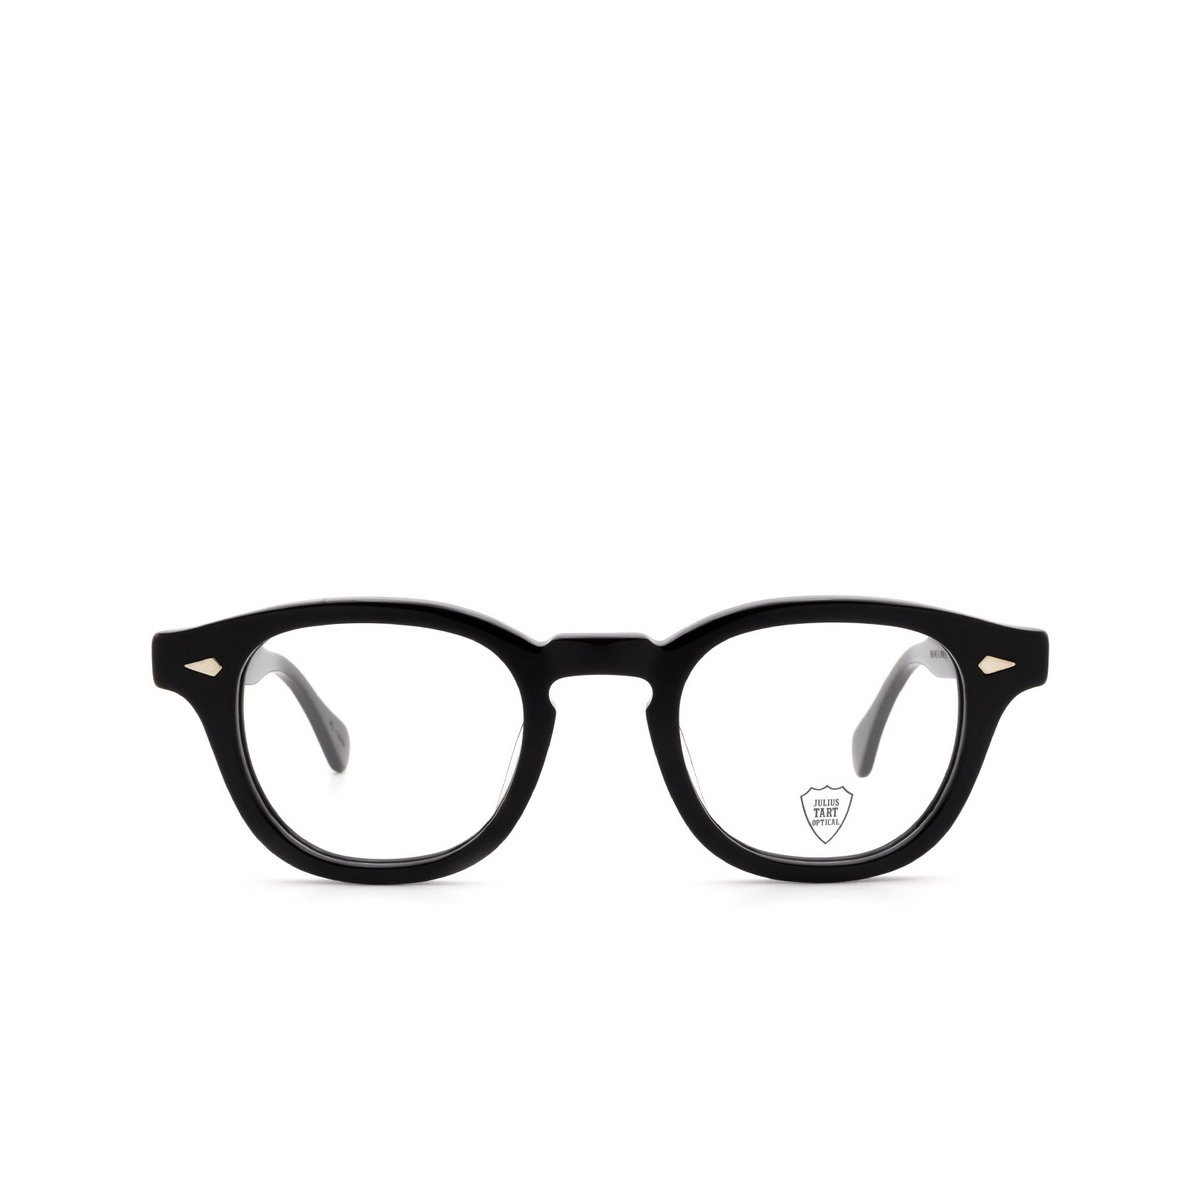 Julius Tart AR Eyeglasses BLACK - front view